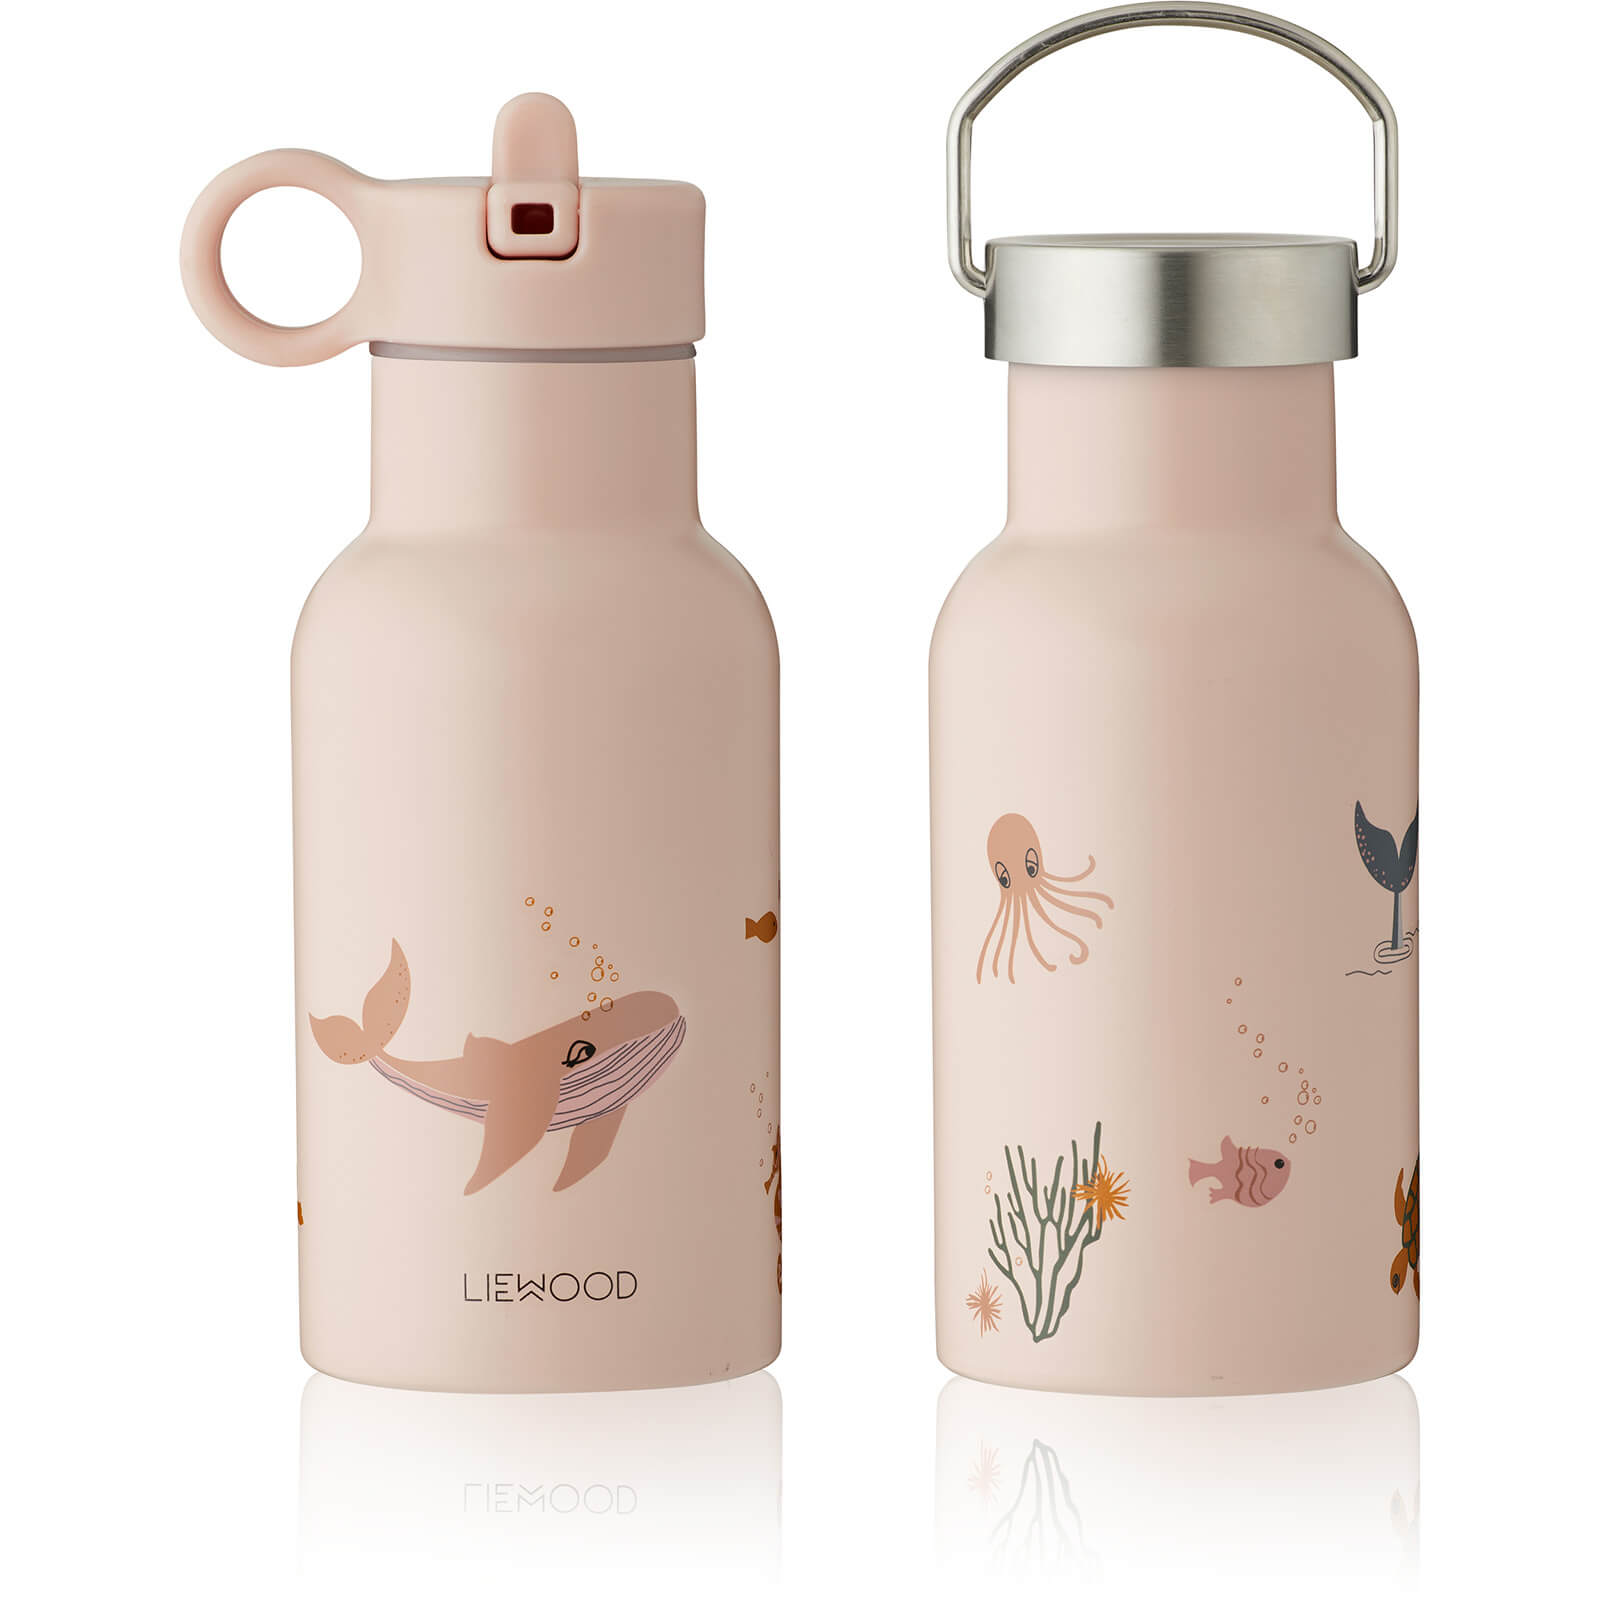 Liewood Anker Kids' Water Bottle - Sea Creature Rose